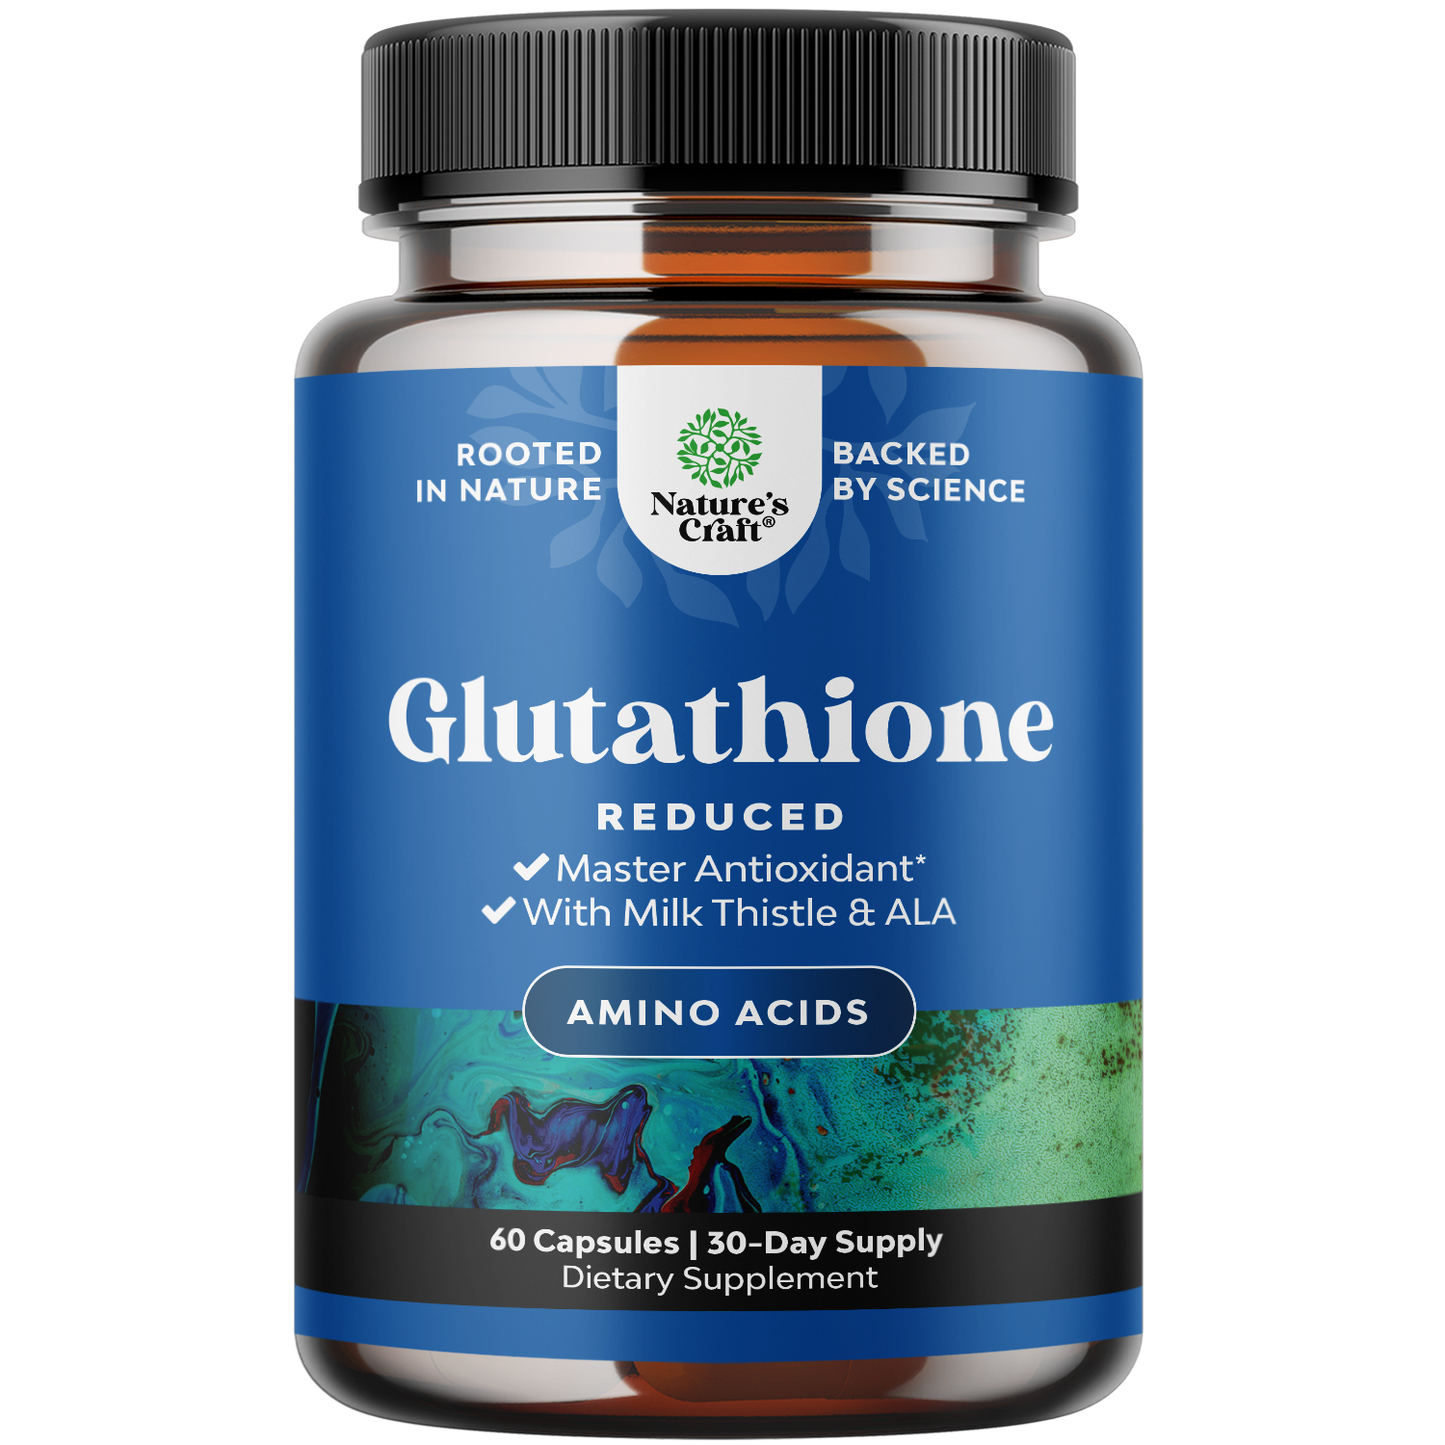 Glutathione 1000mg per serving- 60 Capsules